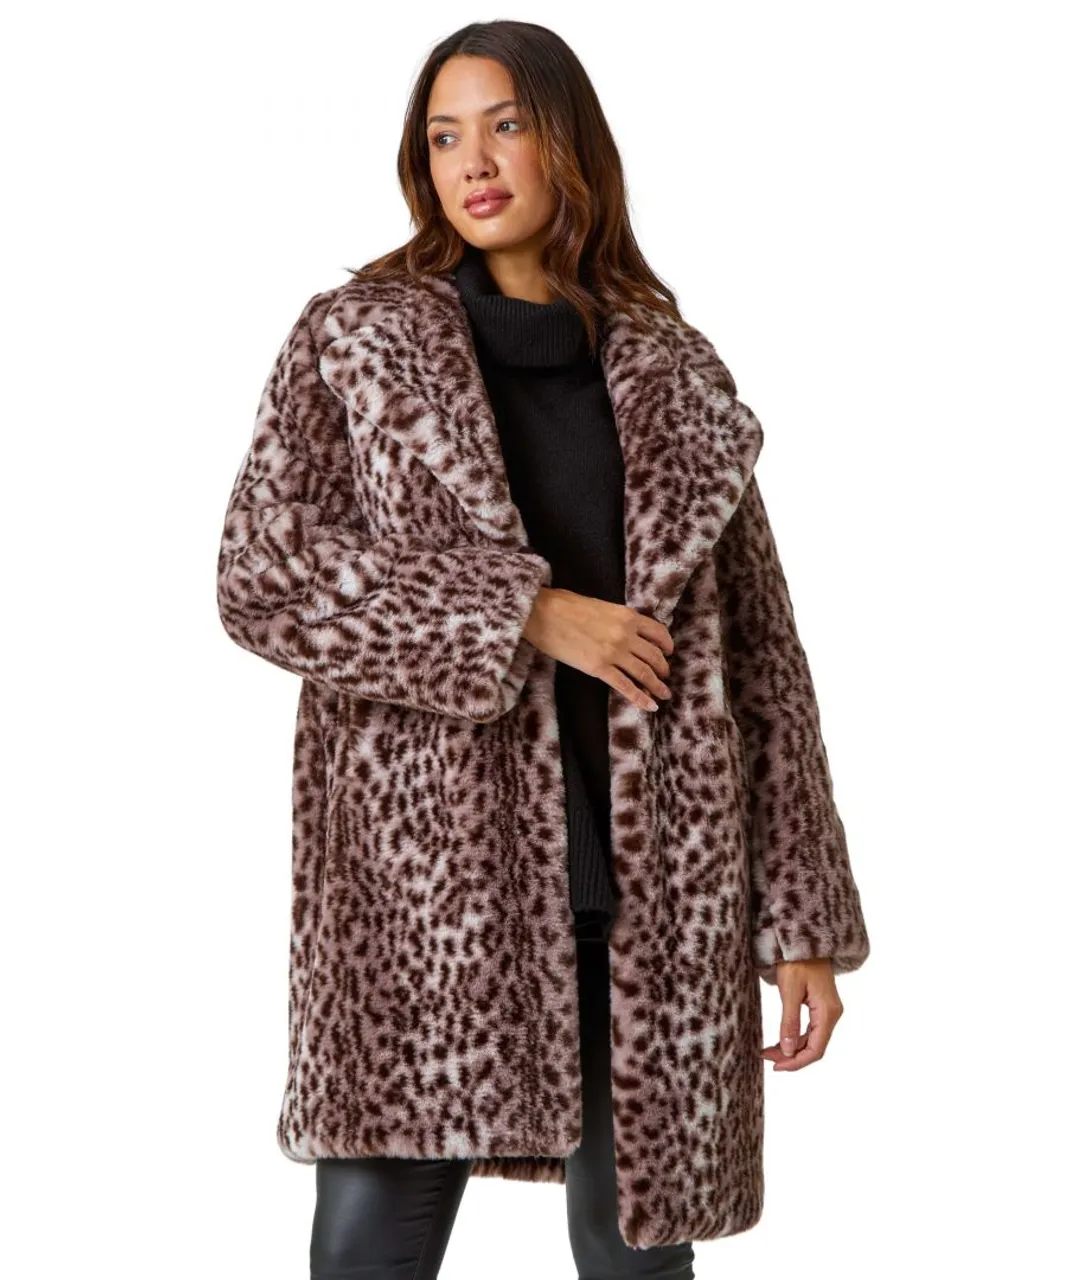 Roman Womens Premium Animal Print Faux Fur Coat - Taupe